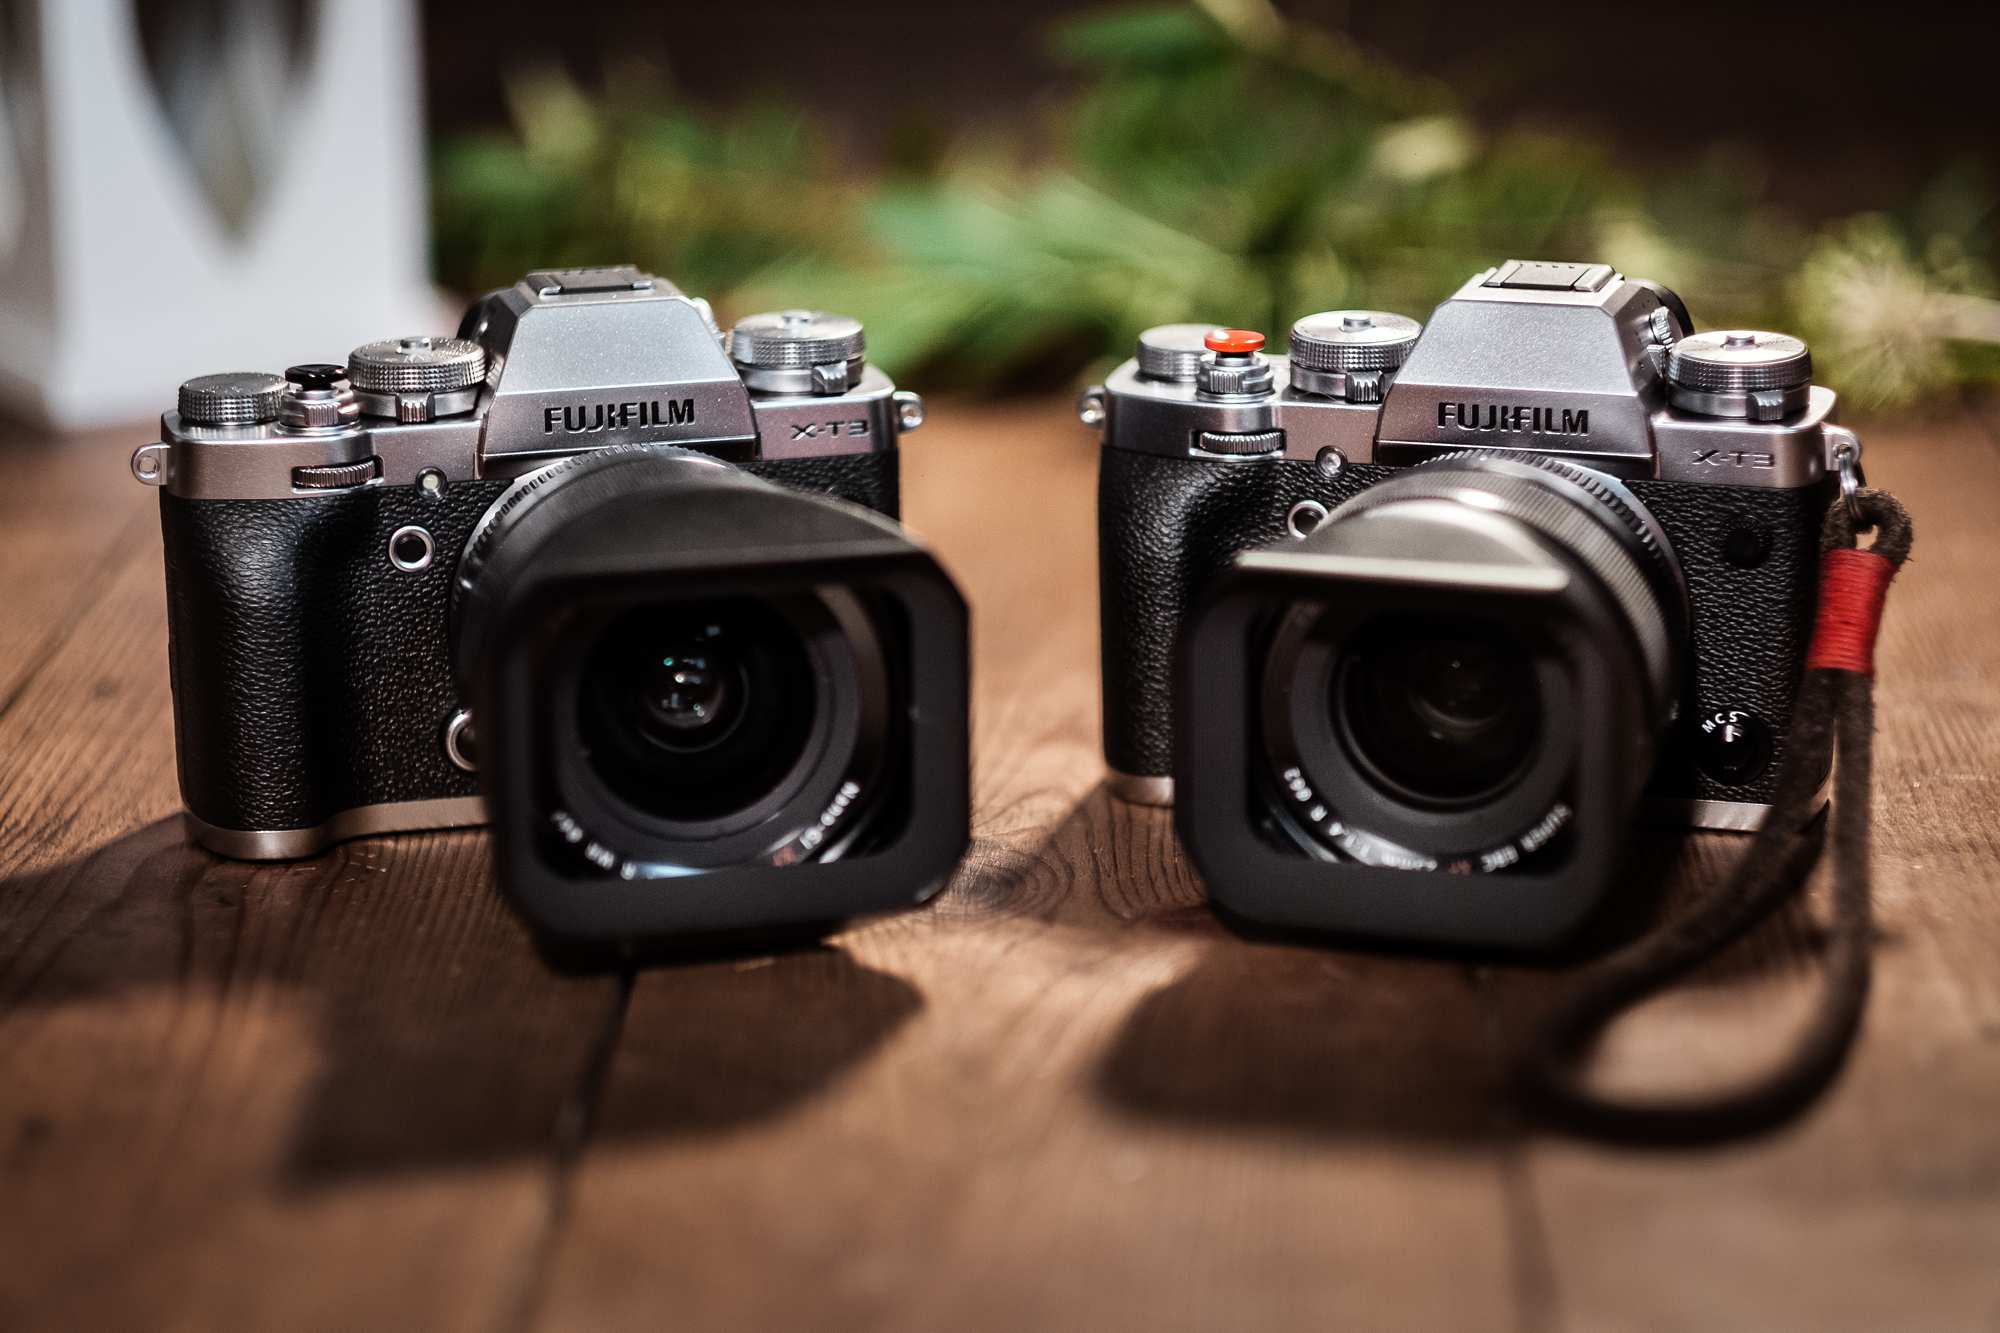 The new Fujifilm X-T3 camera